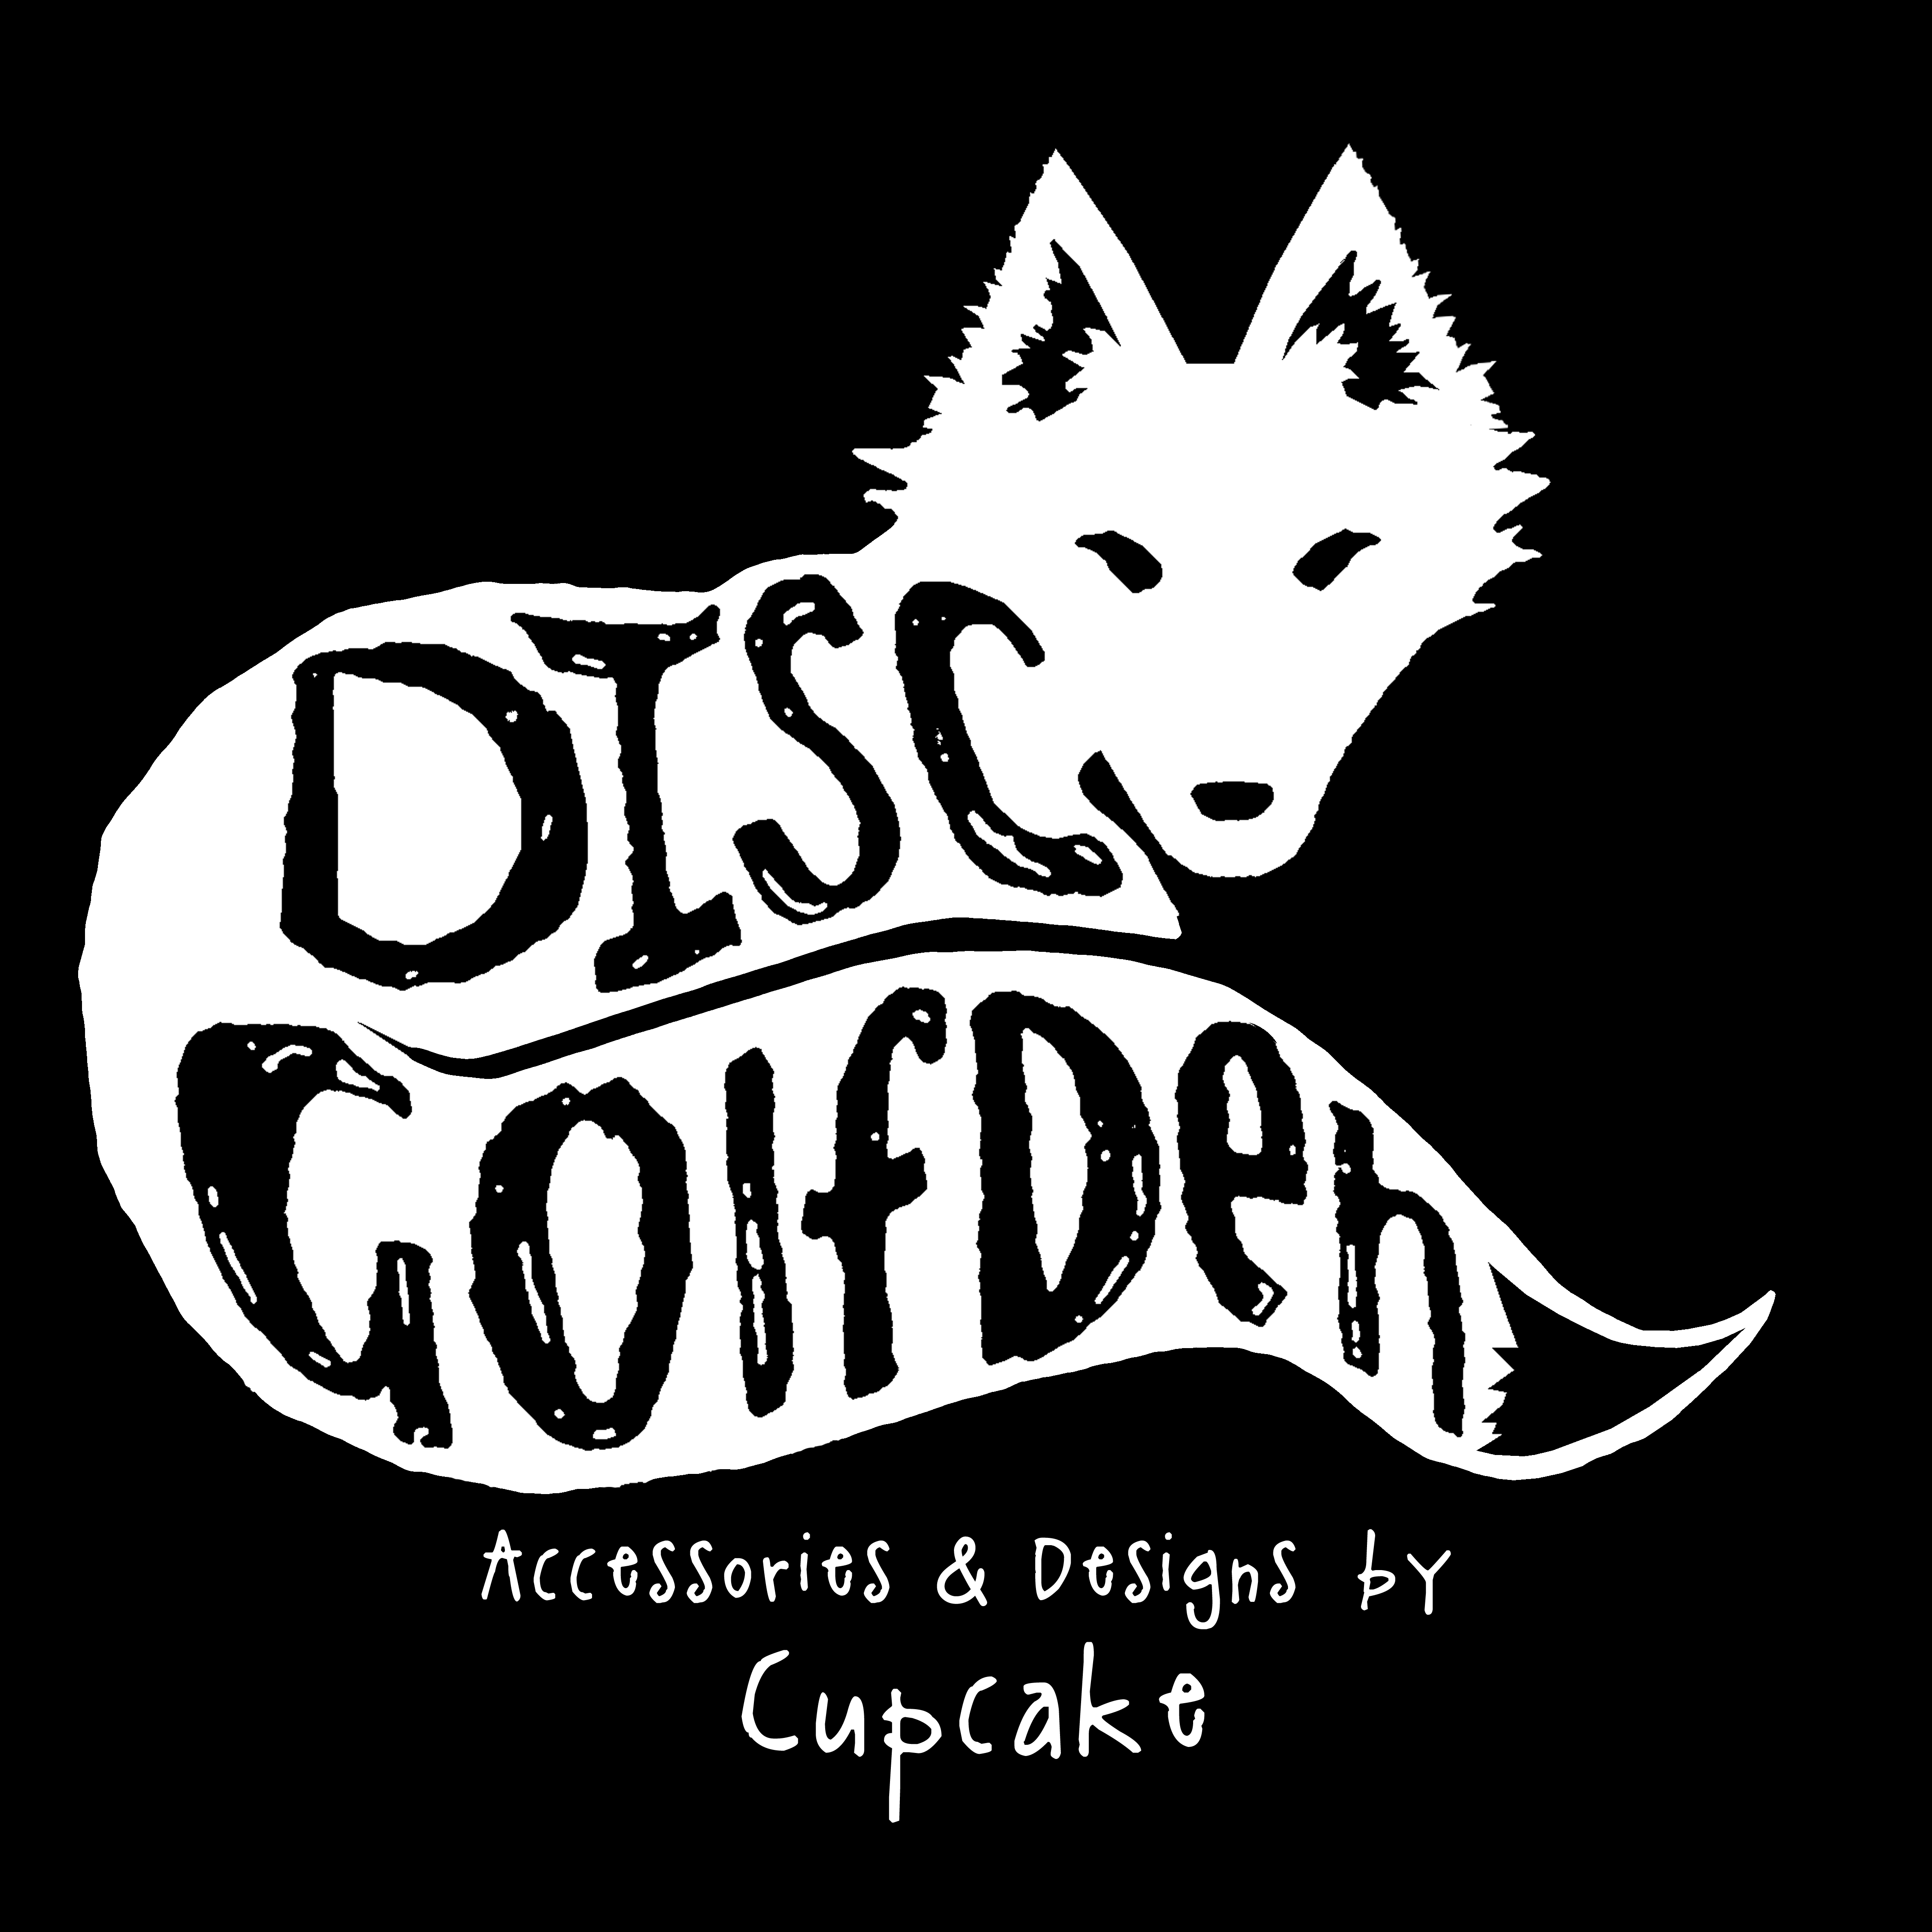 Disc Golf Den - Stickers, Shirts, Accessories & Cupcake's Disc Golf Dice Game